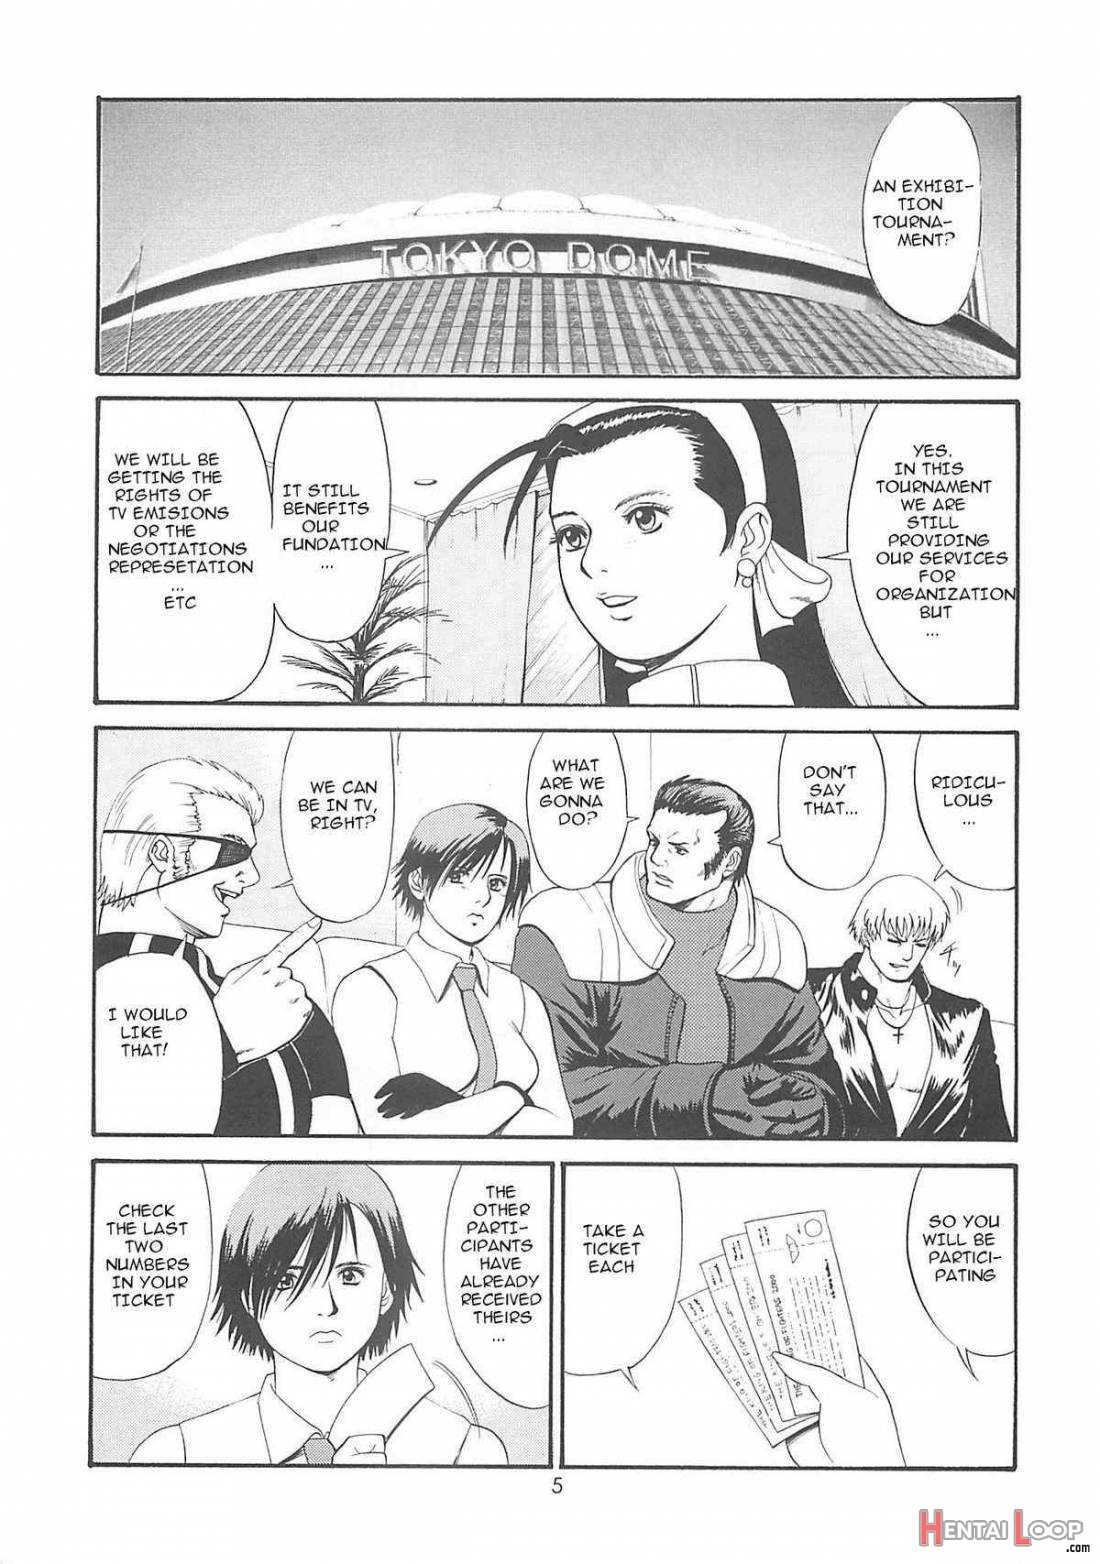 The Yuri&Friends 2000 page 5